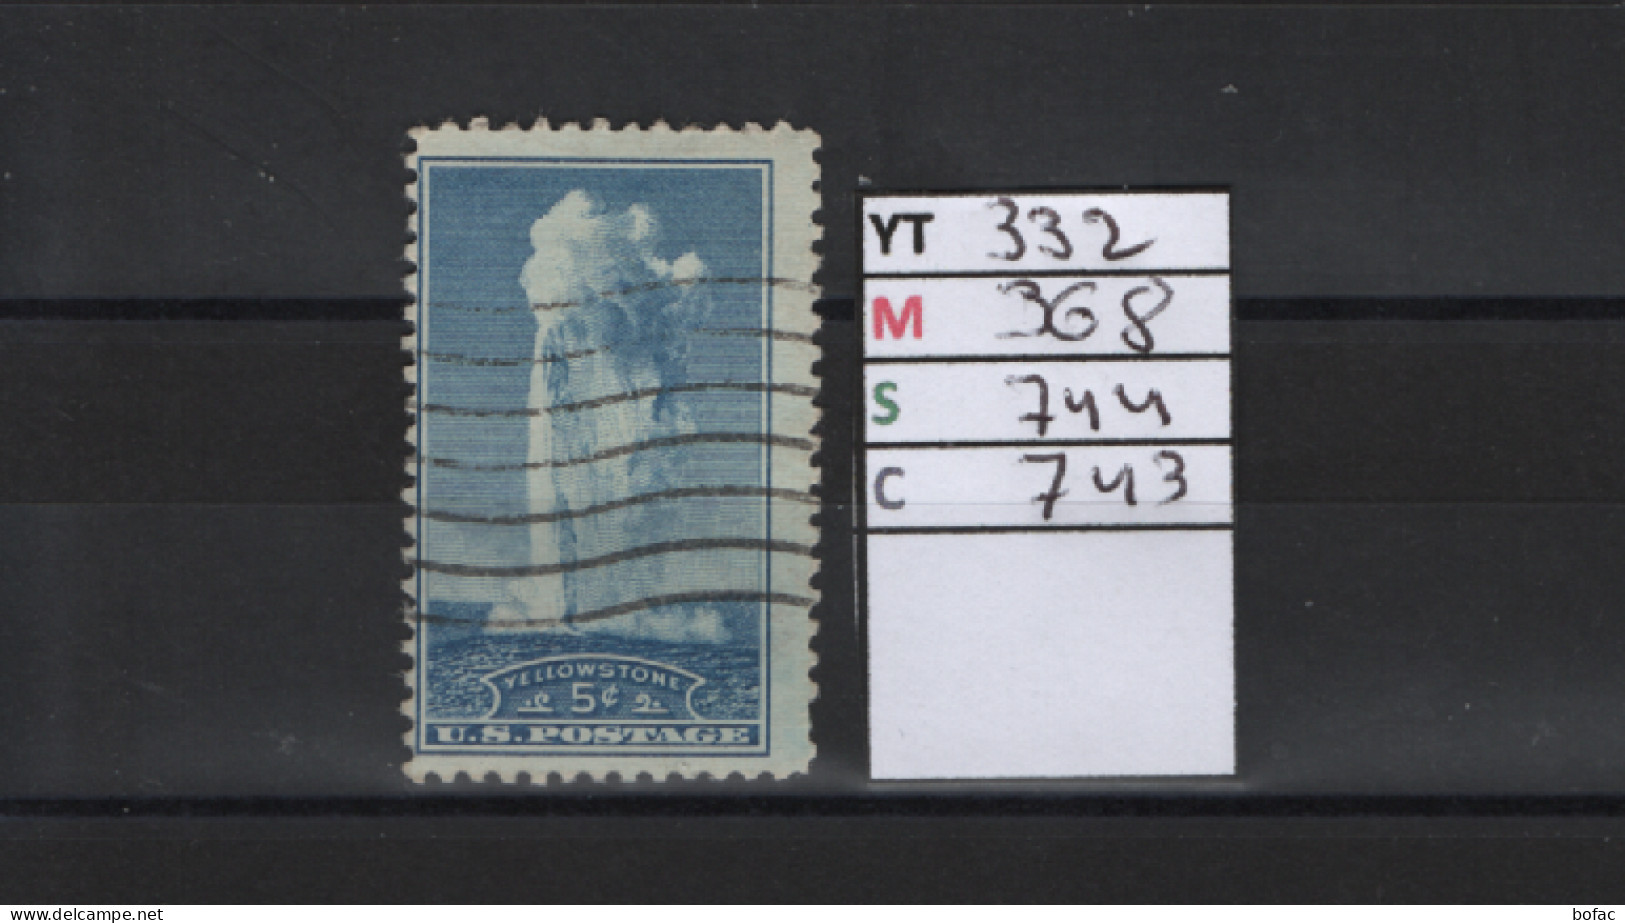 PRIX FIXE Obl 332 YT 368 MIC 744 SCSOT 743 GIB Geyser Wyoming 1934 Etats Unis 58A/01 - Gebruikt